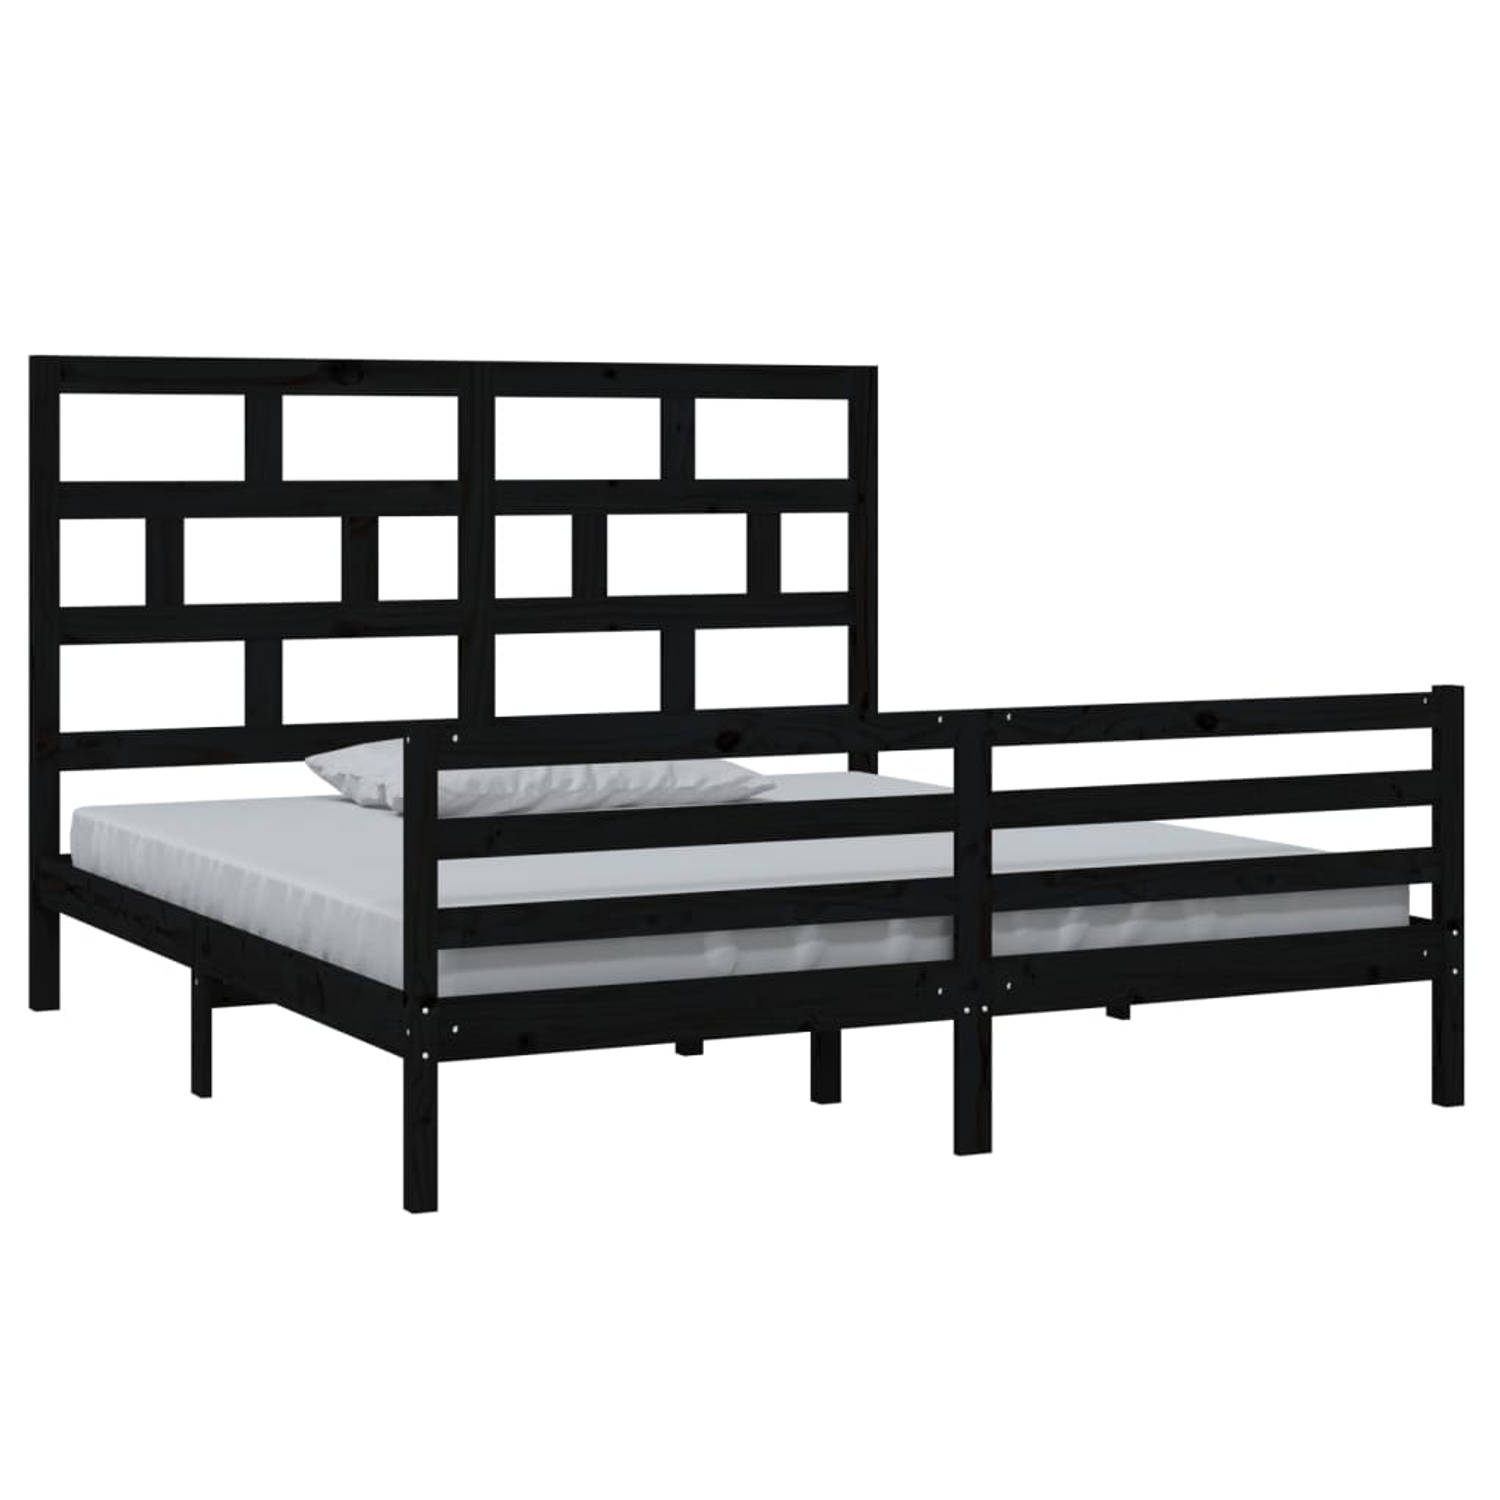 The Living Store Bedframe massief hout zwart 180x200 cm 6FT Super King - Bedframe - Bedframes - Bed - Bedbodem - Ledikant - Bed Frame - Massief Houten Bedframe - Slaapmeubel - Twee